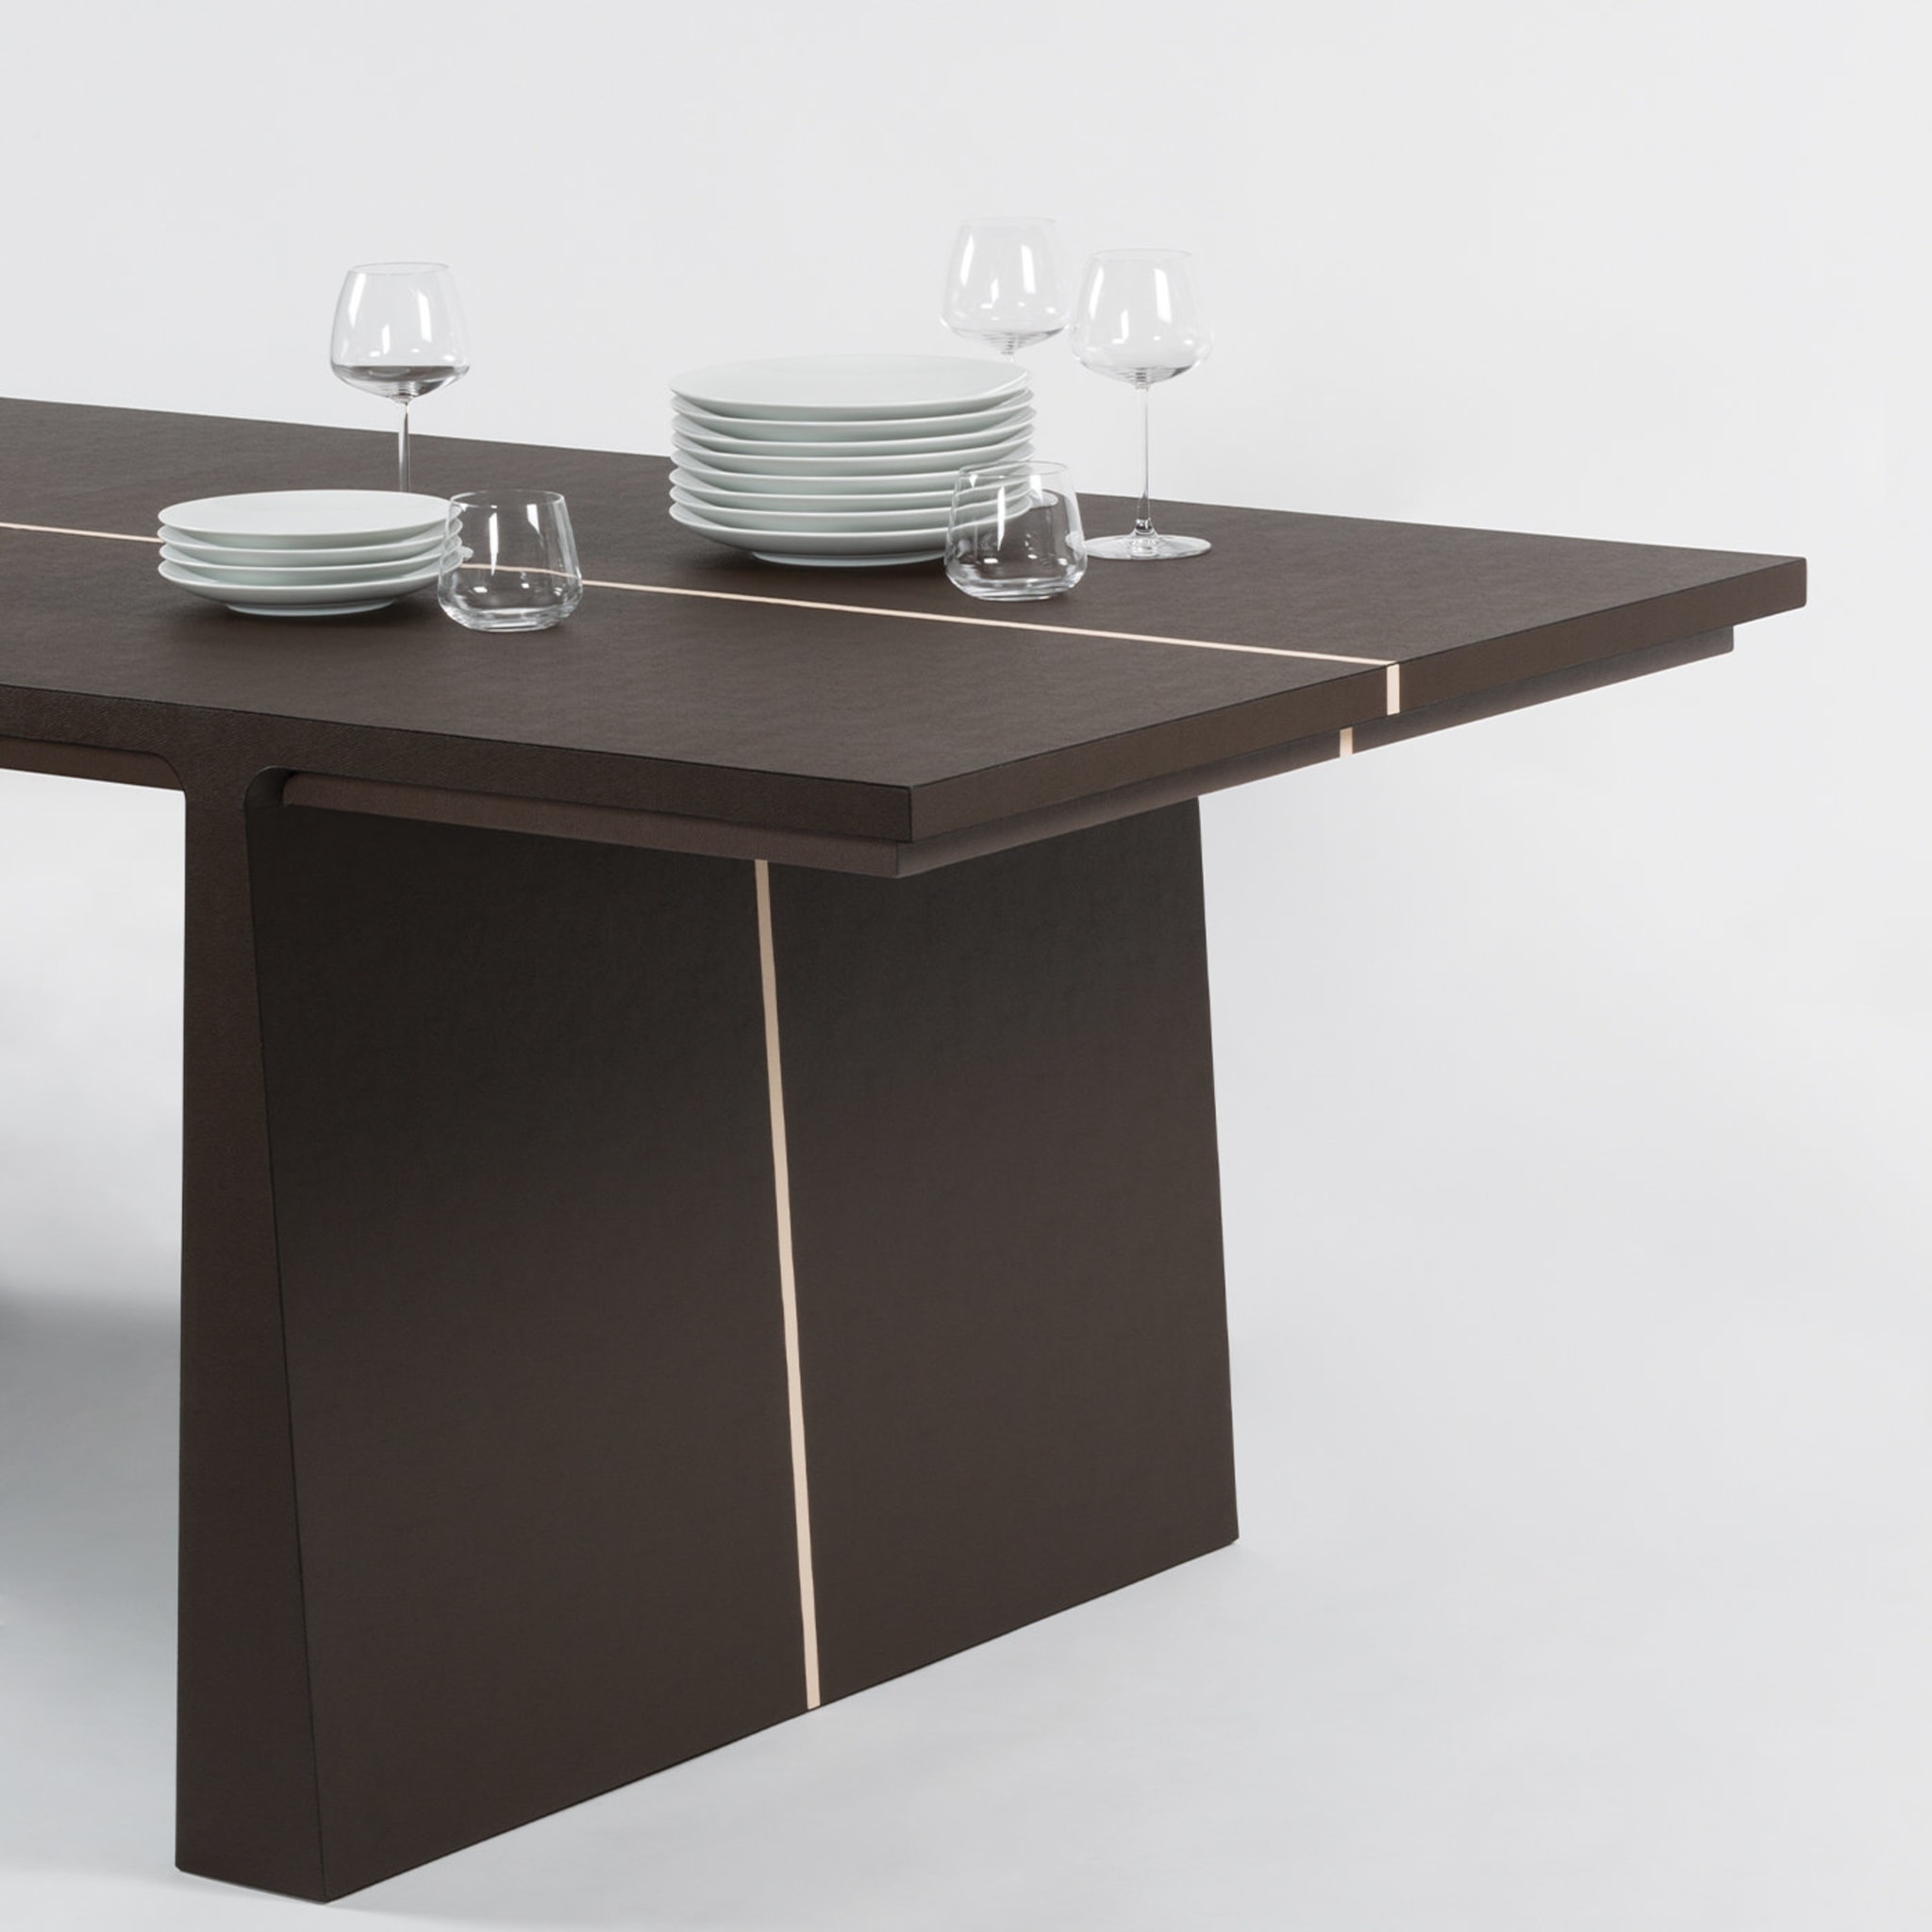 La Linea Brown Leather Desk/Dining Table - Alternative view 1